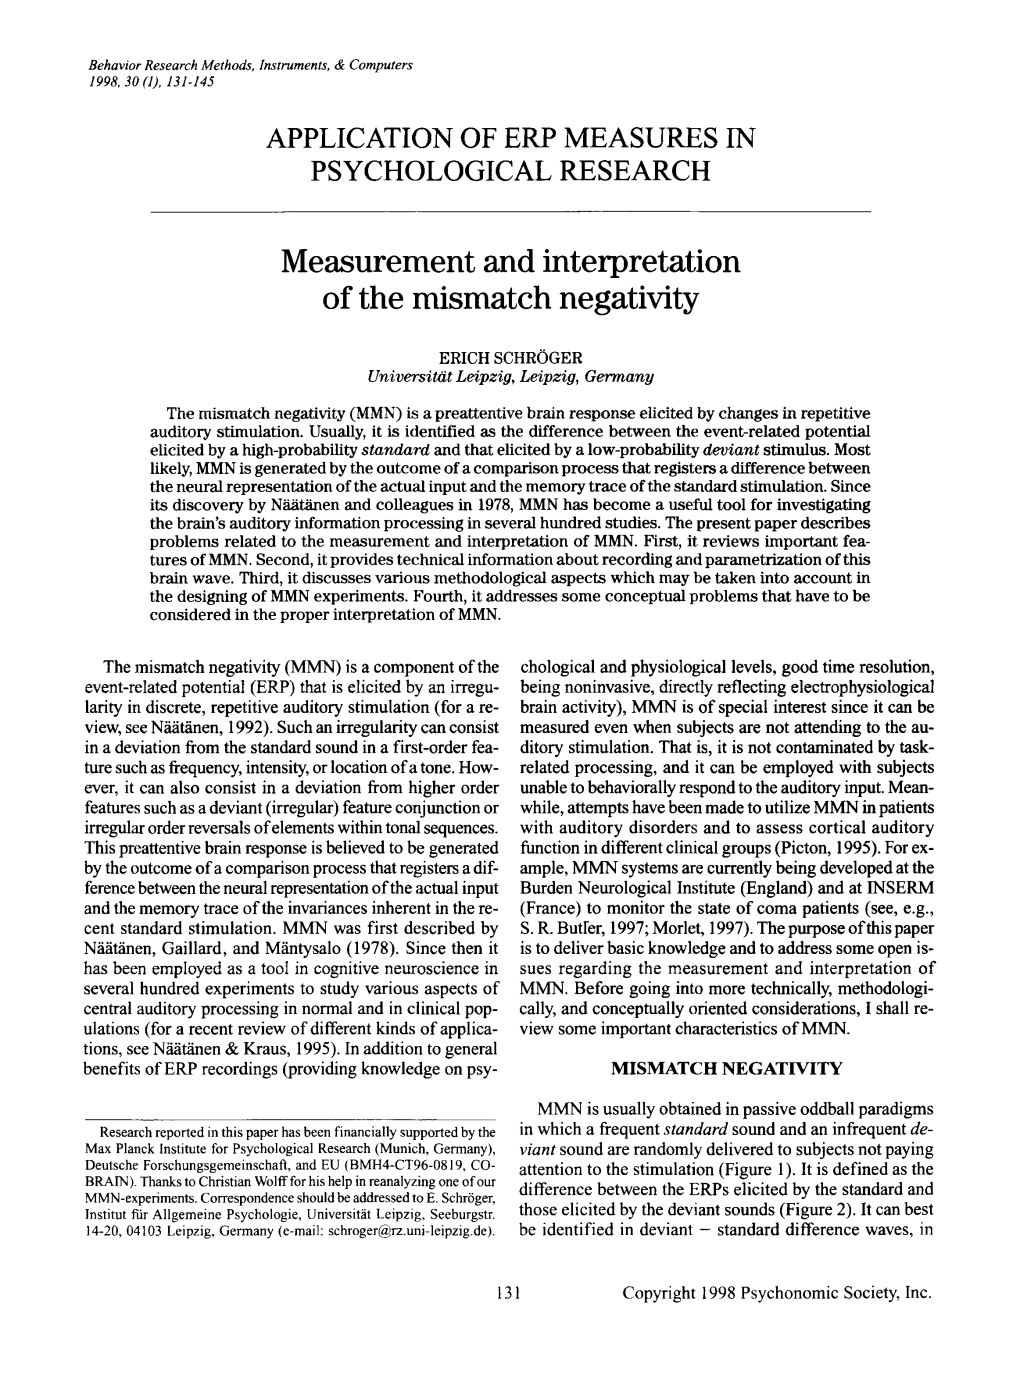 Measurement and Interpretation of the Mismatch Negativity